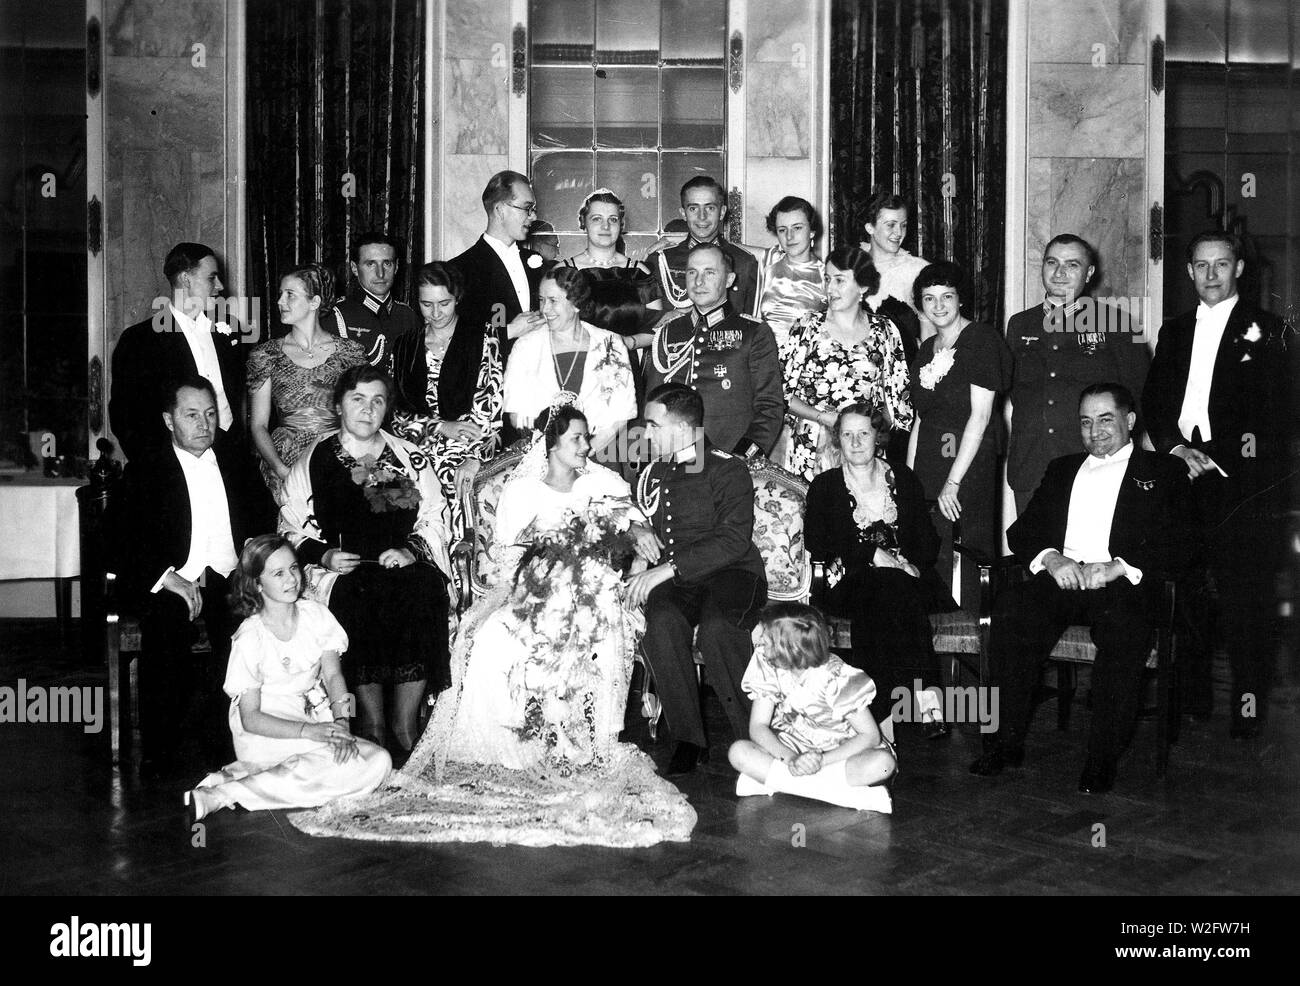 Eva Braun Collection (Album 2) - German wedding of a military man ca. 1930s Germany Stock Photo